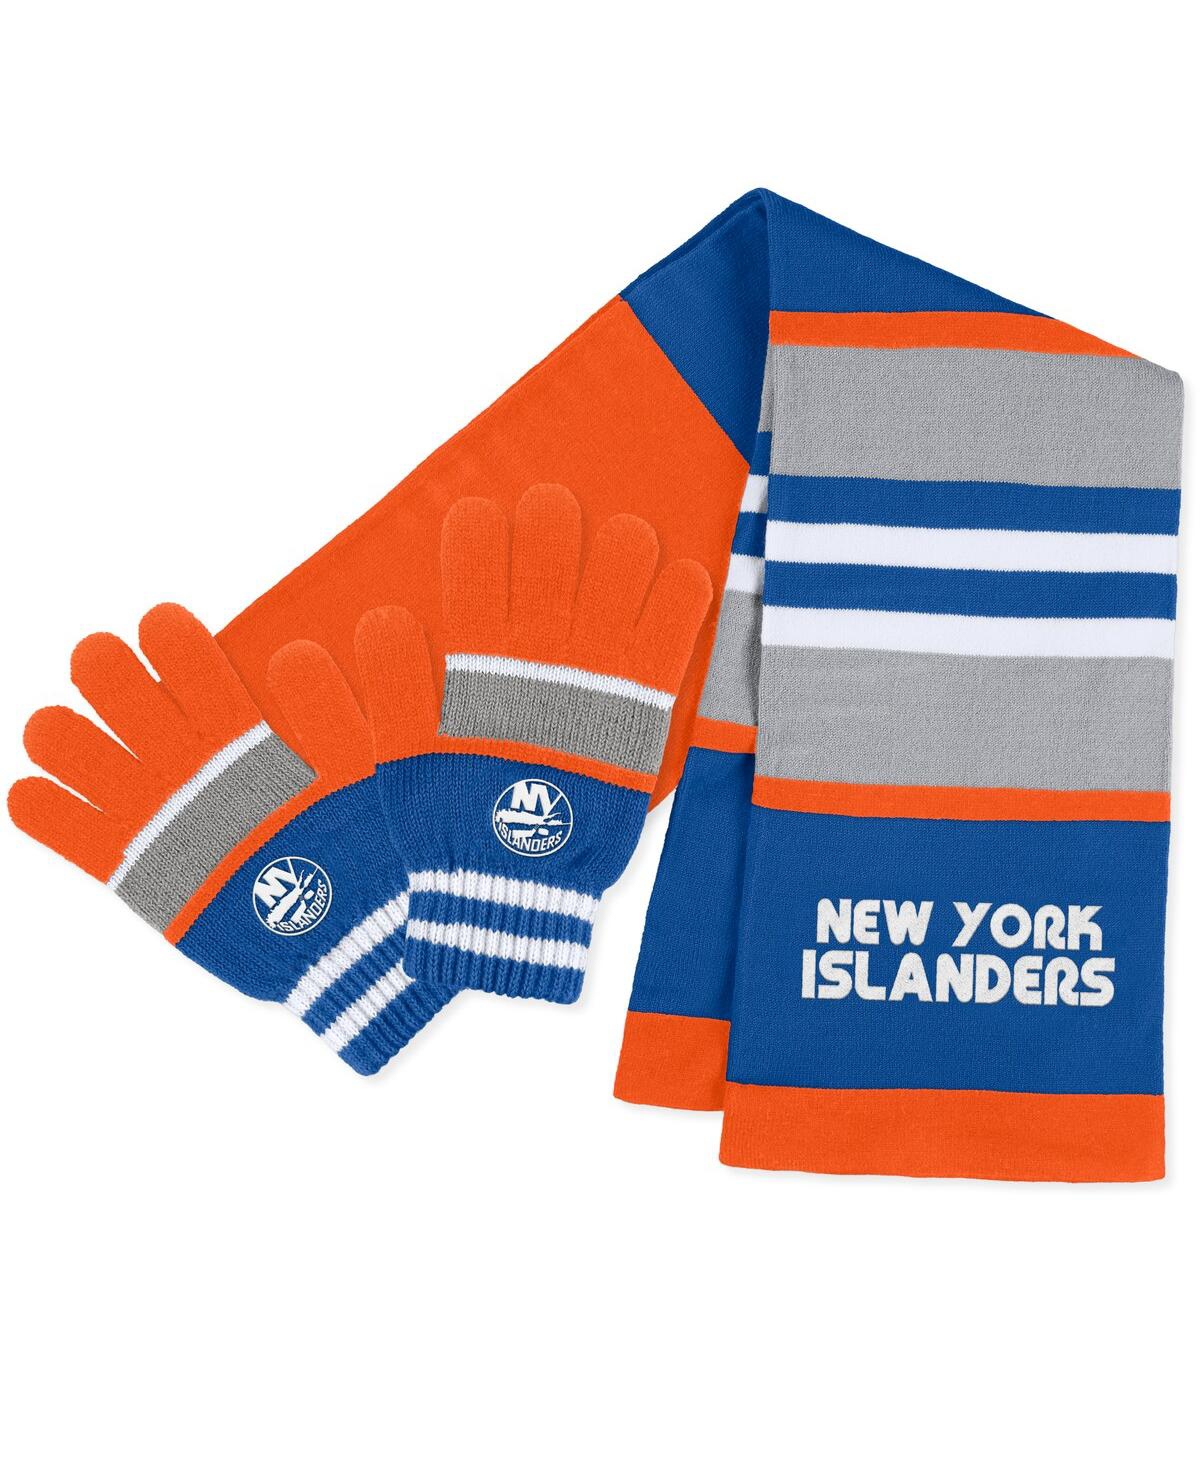 Women's Wear by Erin Andrews New York Islanders Stripe Glove and Scarf Set - Multi